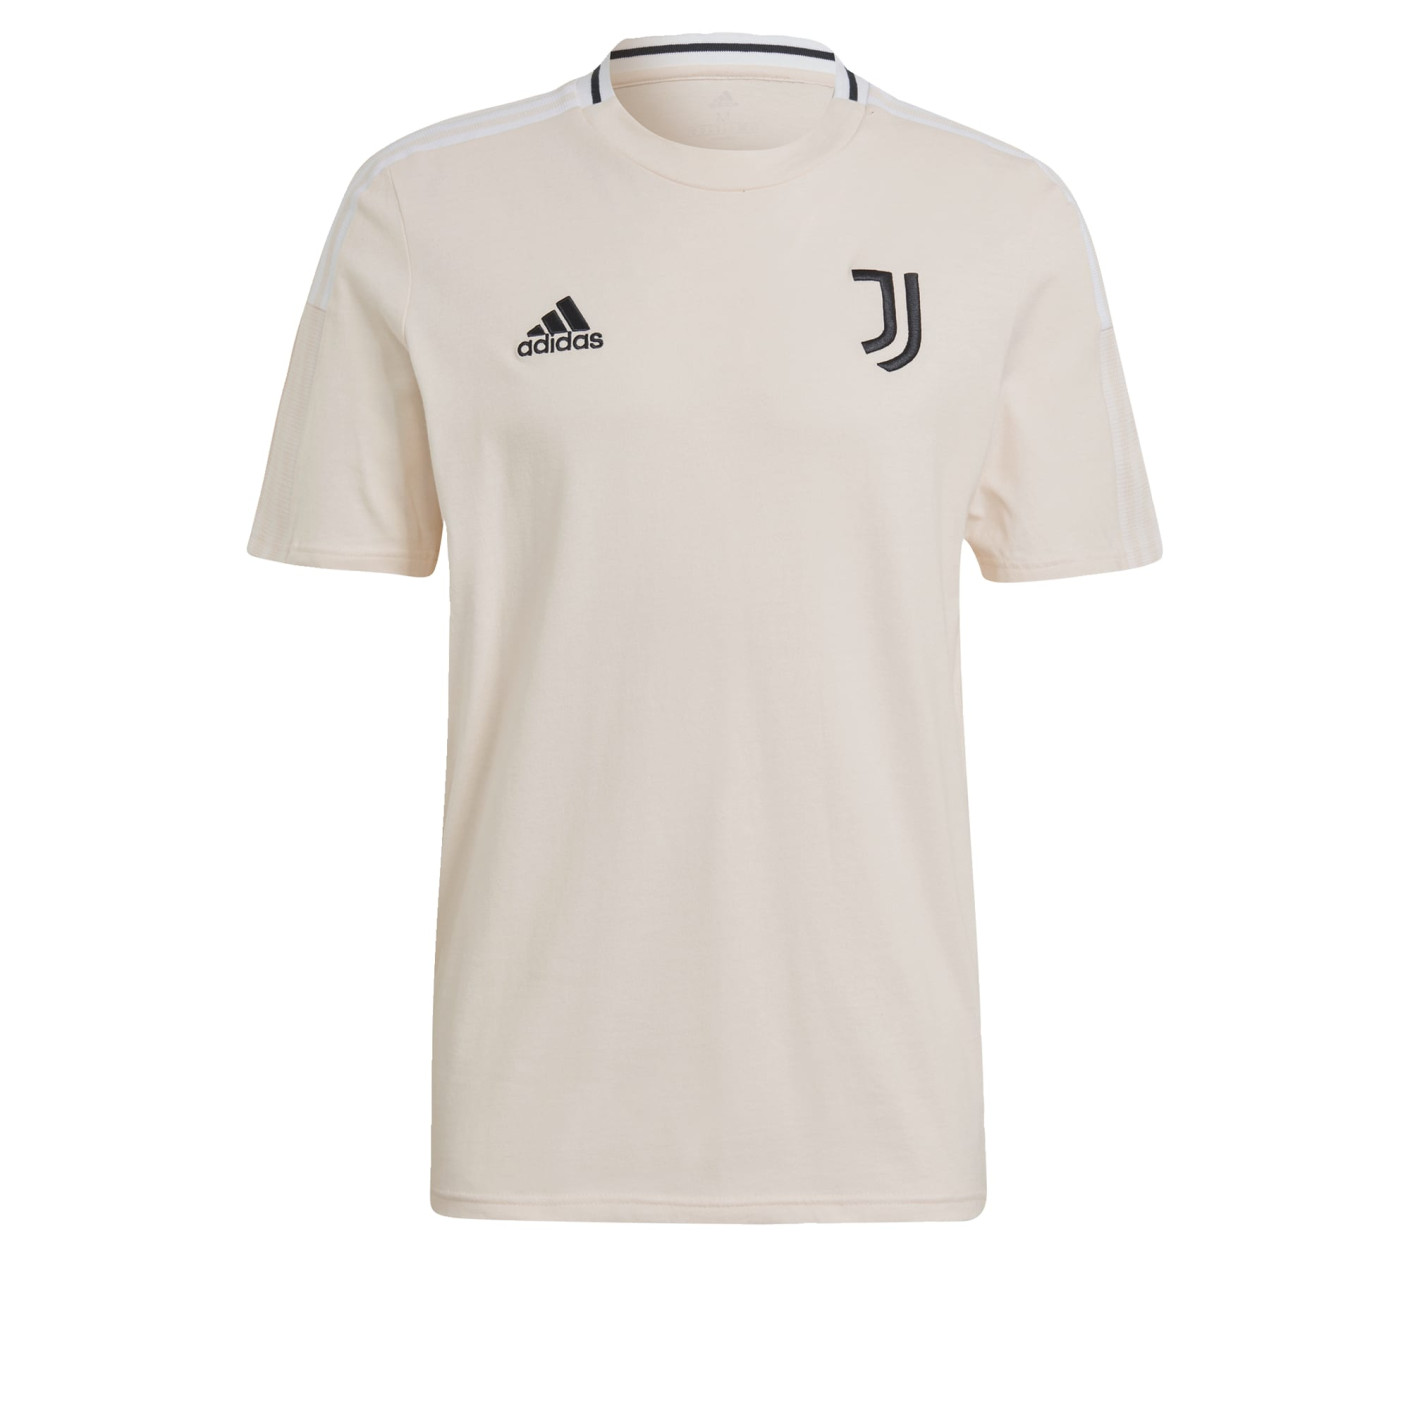 overhandigen Donker worden massa adidas Juventus T-shirt 2021 Roze